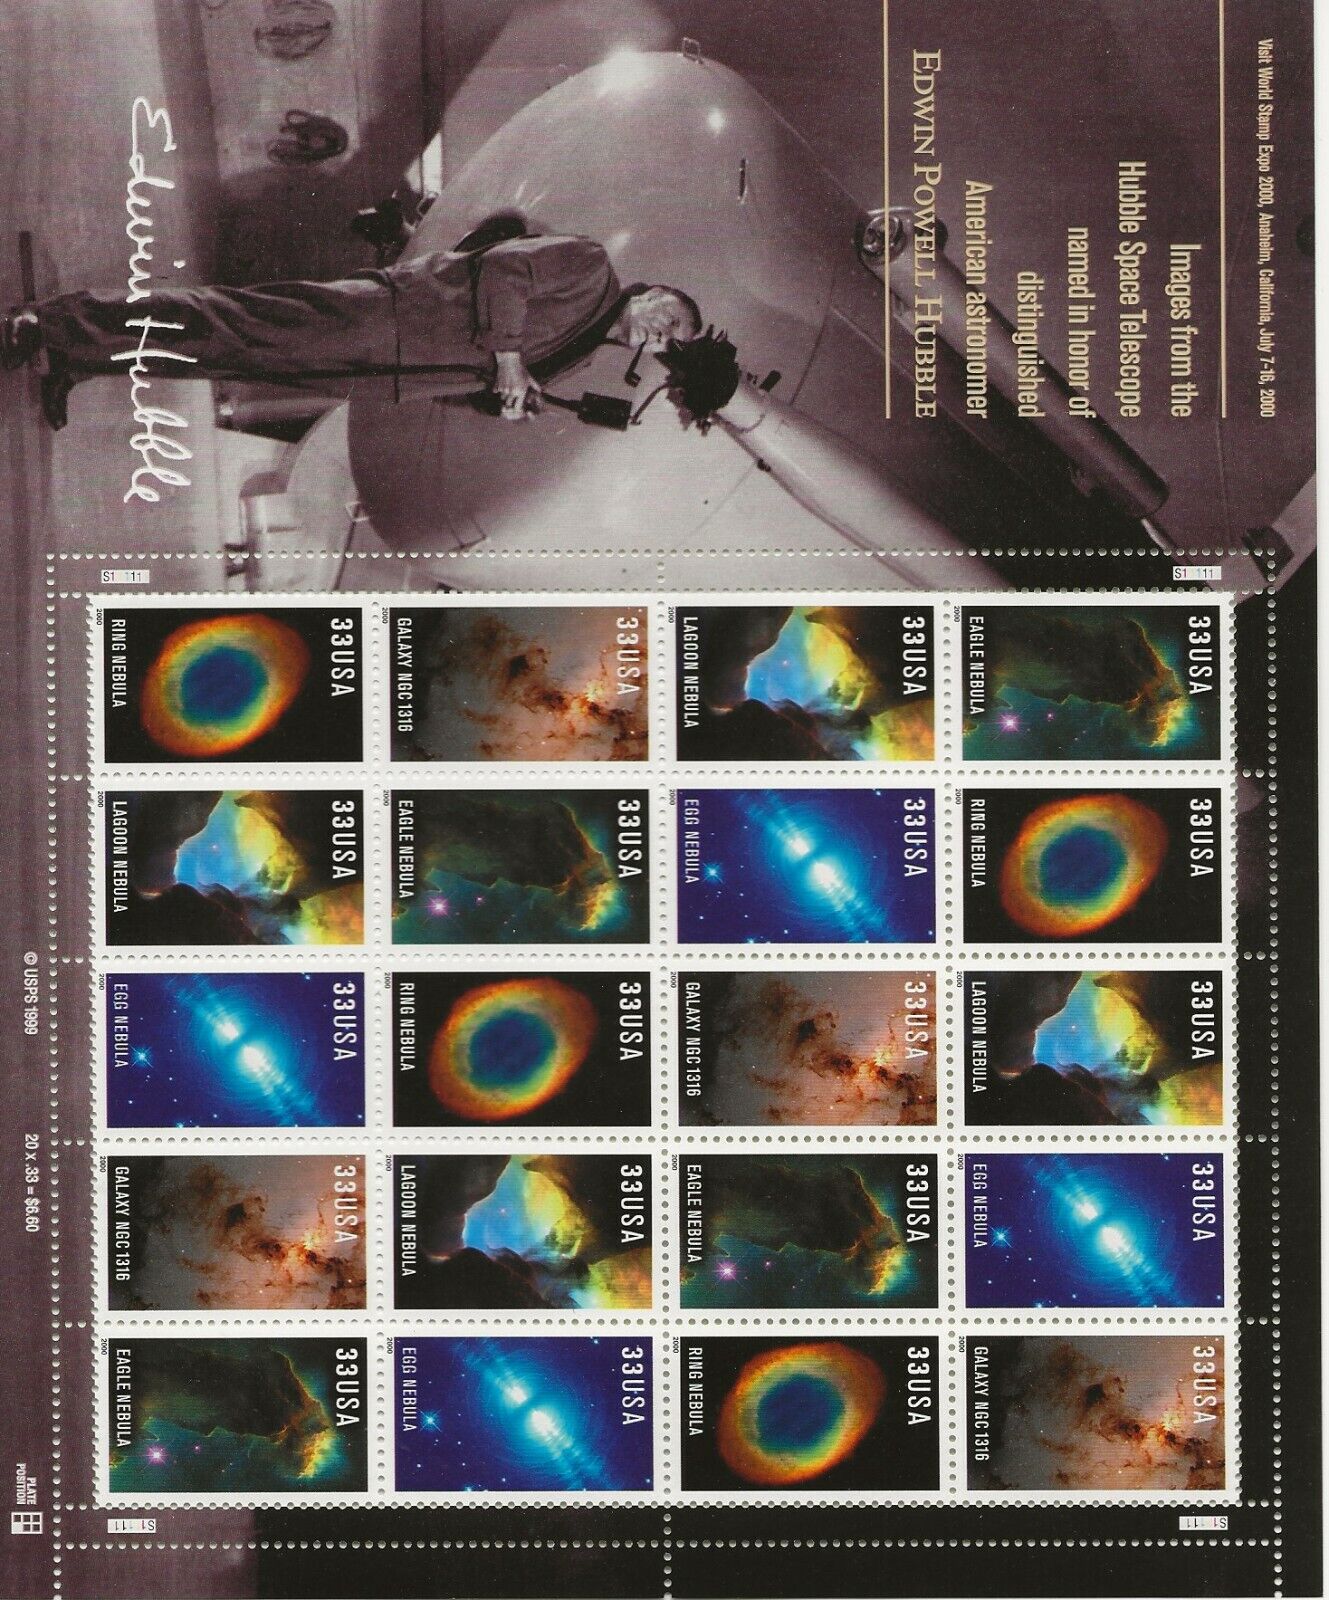 2000 33 cent Edwin Hubble full Sheet of 20, Scott #3384-3388, Mint NH